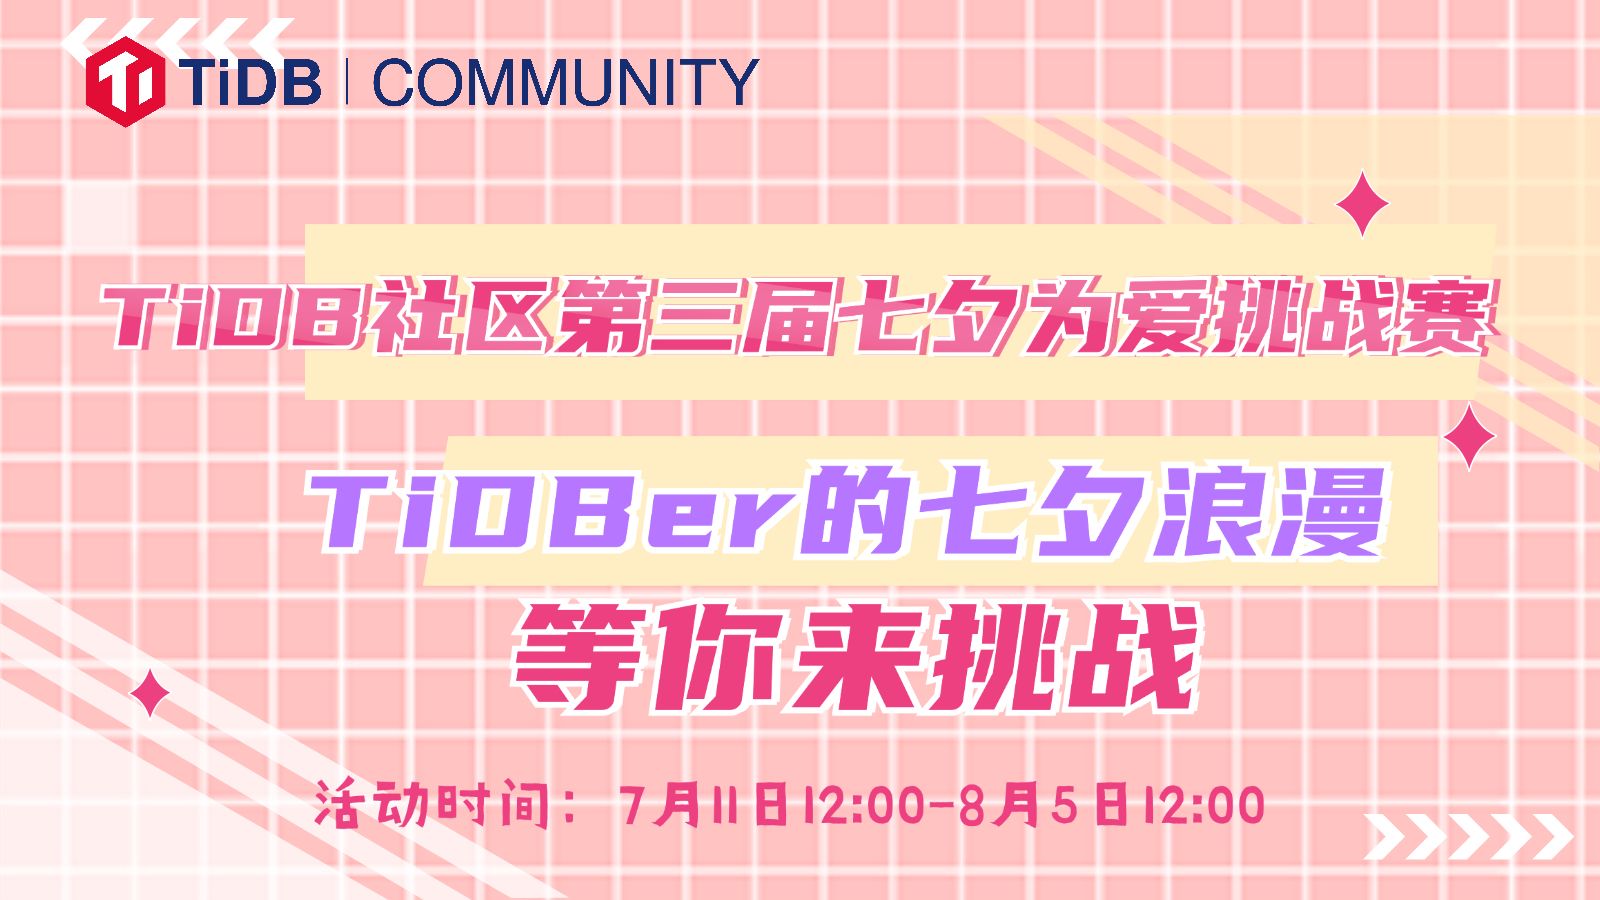 TiDB 社区第三届七夕为爱挑战赛正式开启，等你来挑战！把 TiDBer 专属七夕浪漫带给心爱的TA！